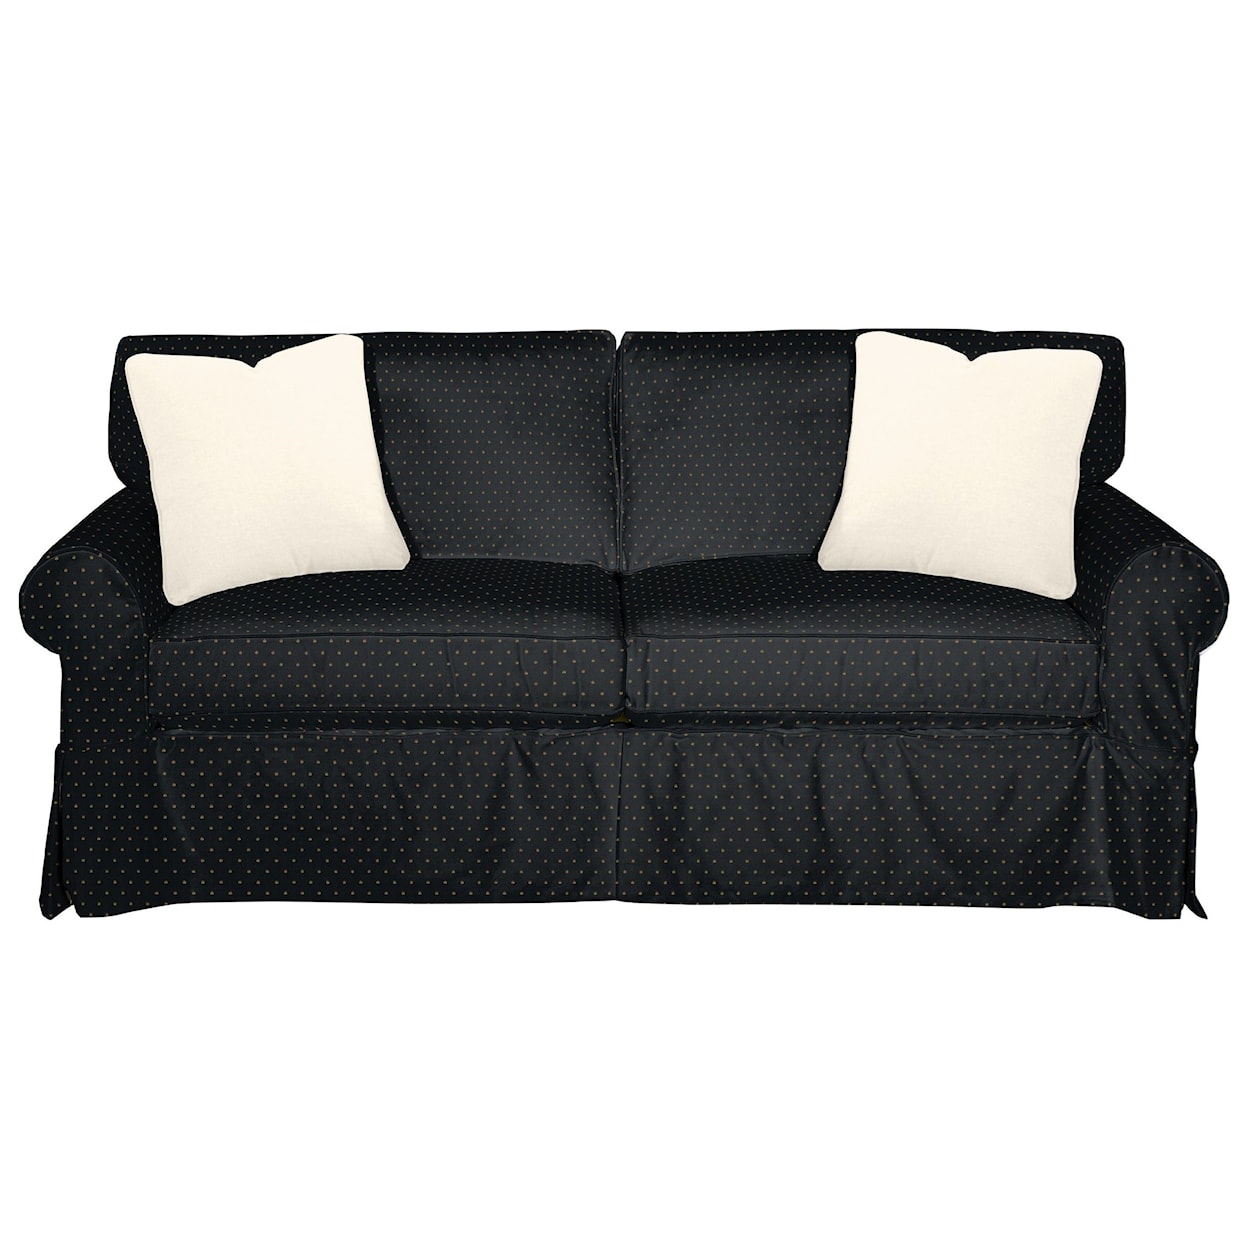 Craftmaster 922850 Sleeper Sofa w/ Innerspring Mattress